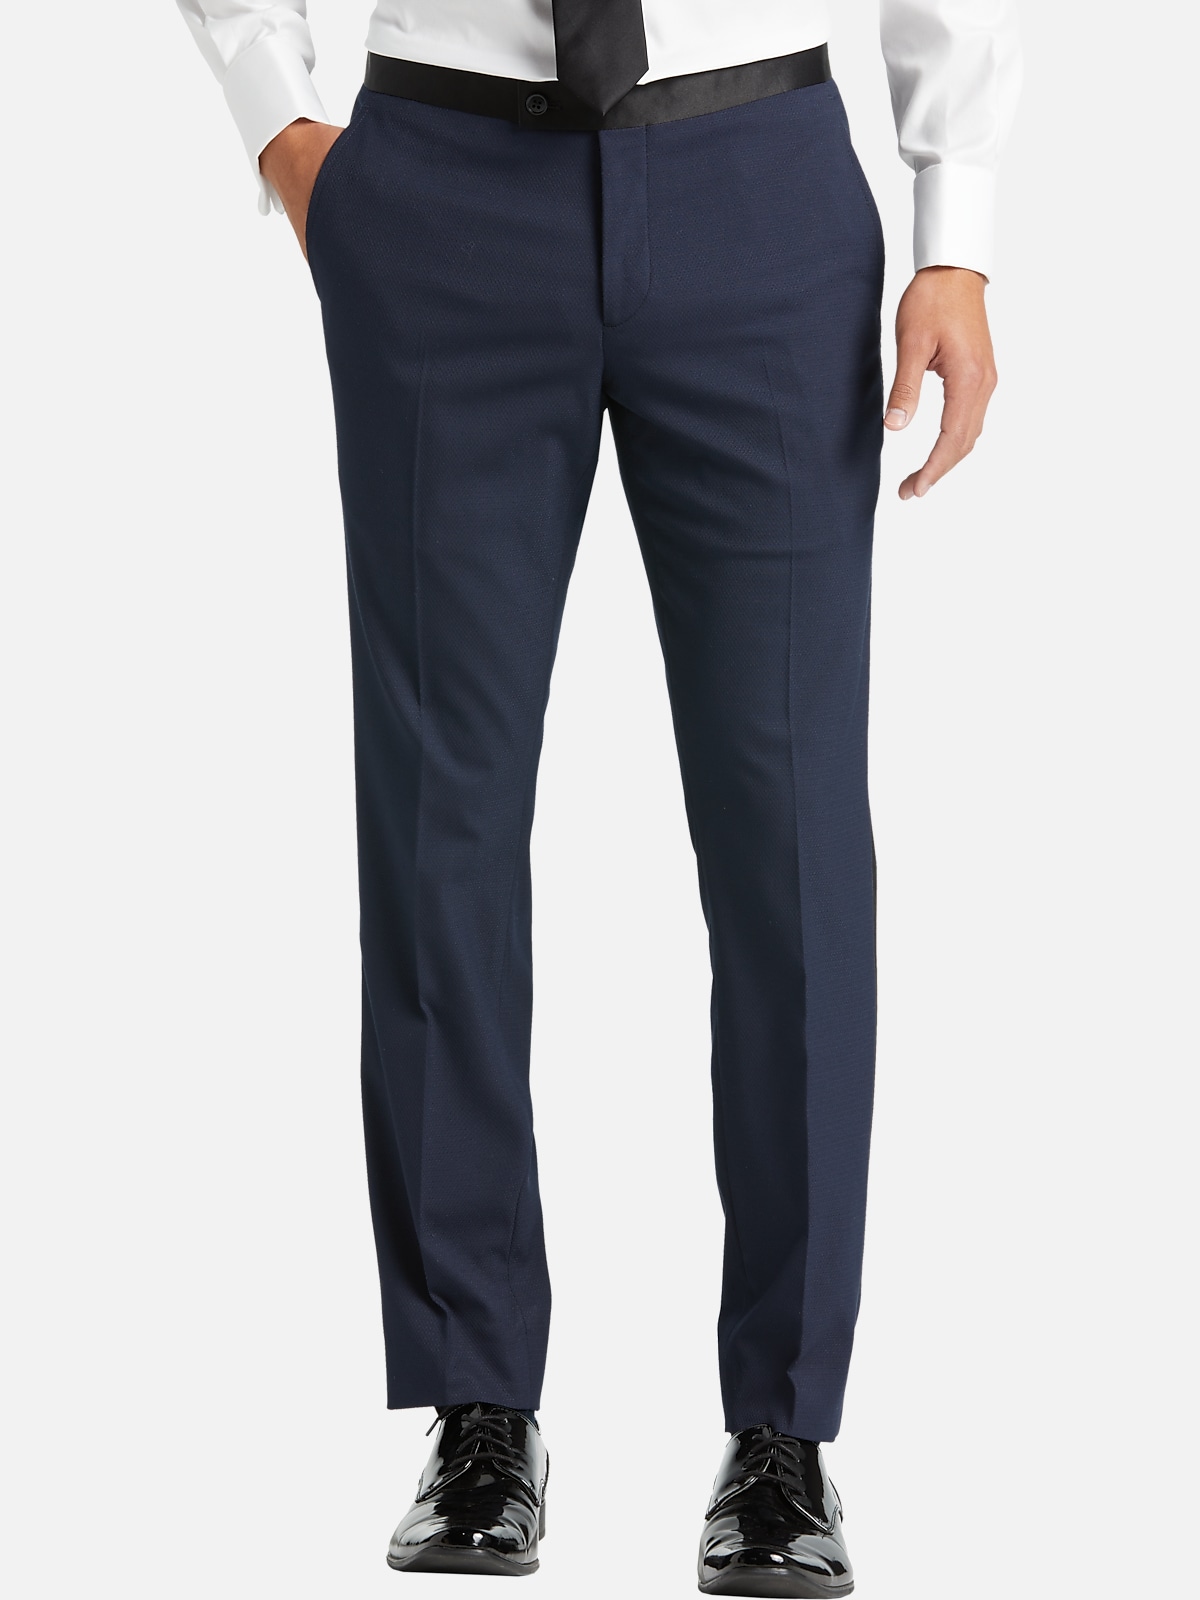 Egara Skinny Fit Suit Separates Pants | All Sale| Men's Wearhouse